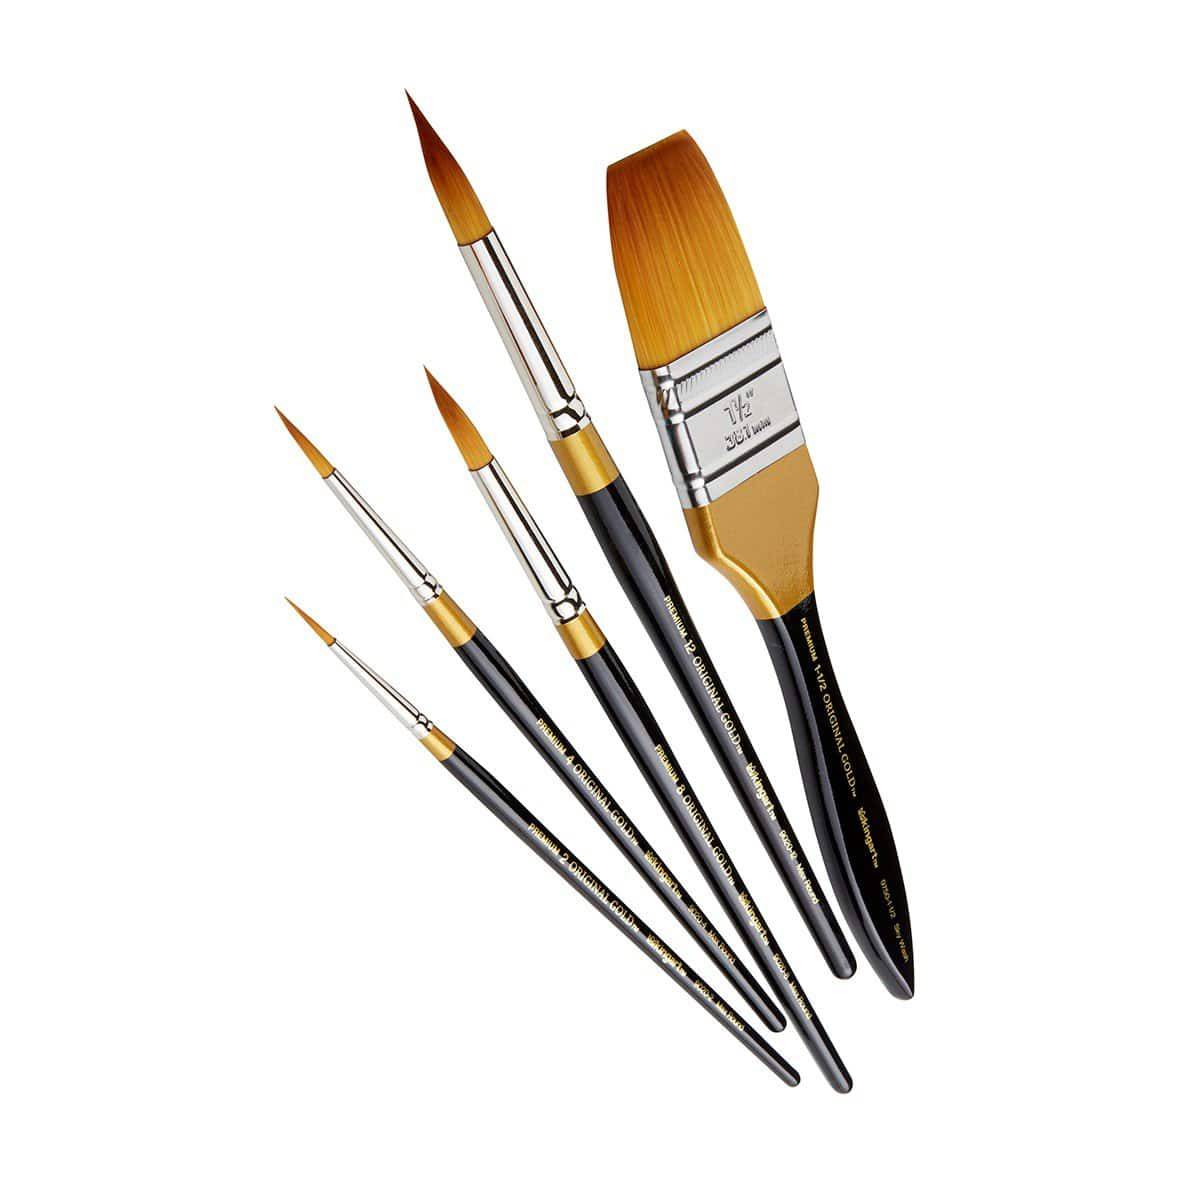 Kingart Original Gold 9247 Crescent Filbert Synthetic Blend Series Premium Multimedia Artist Brushes, Set of 4